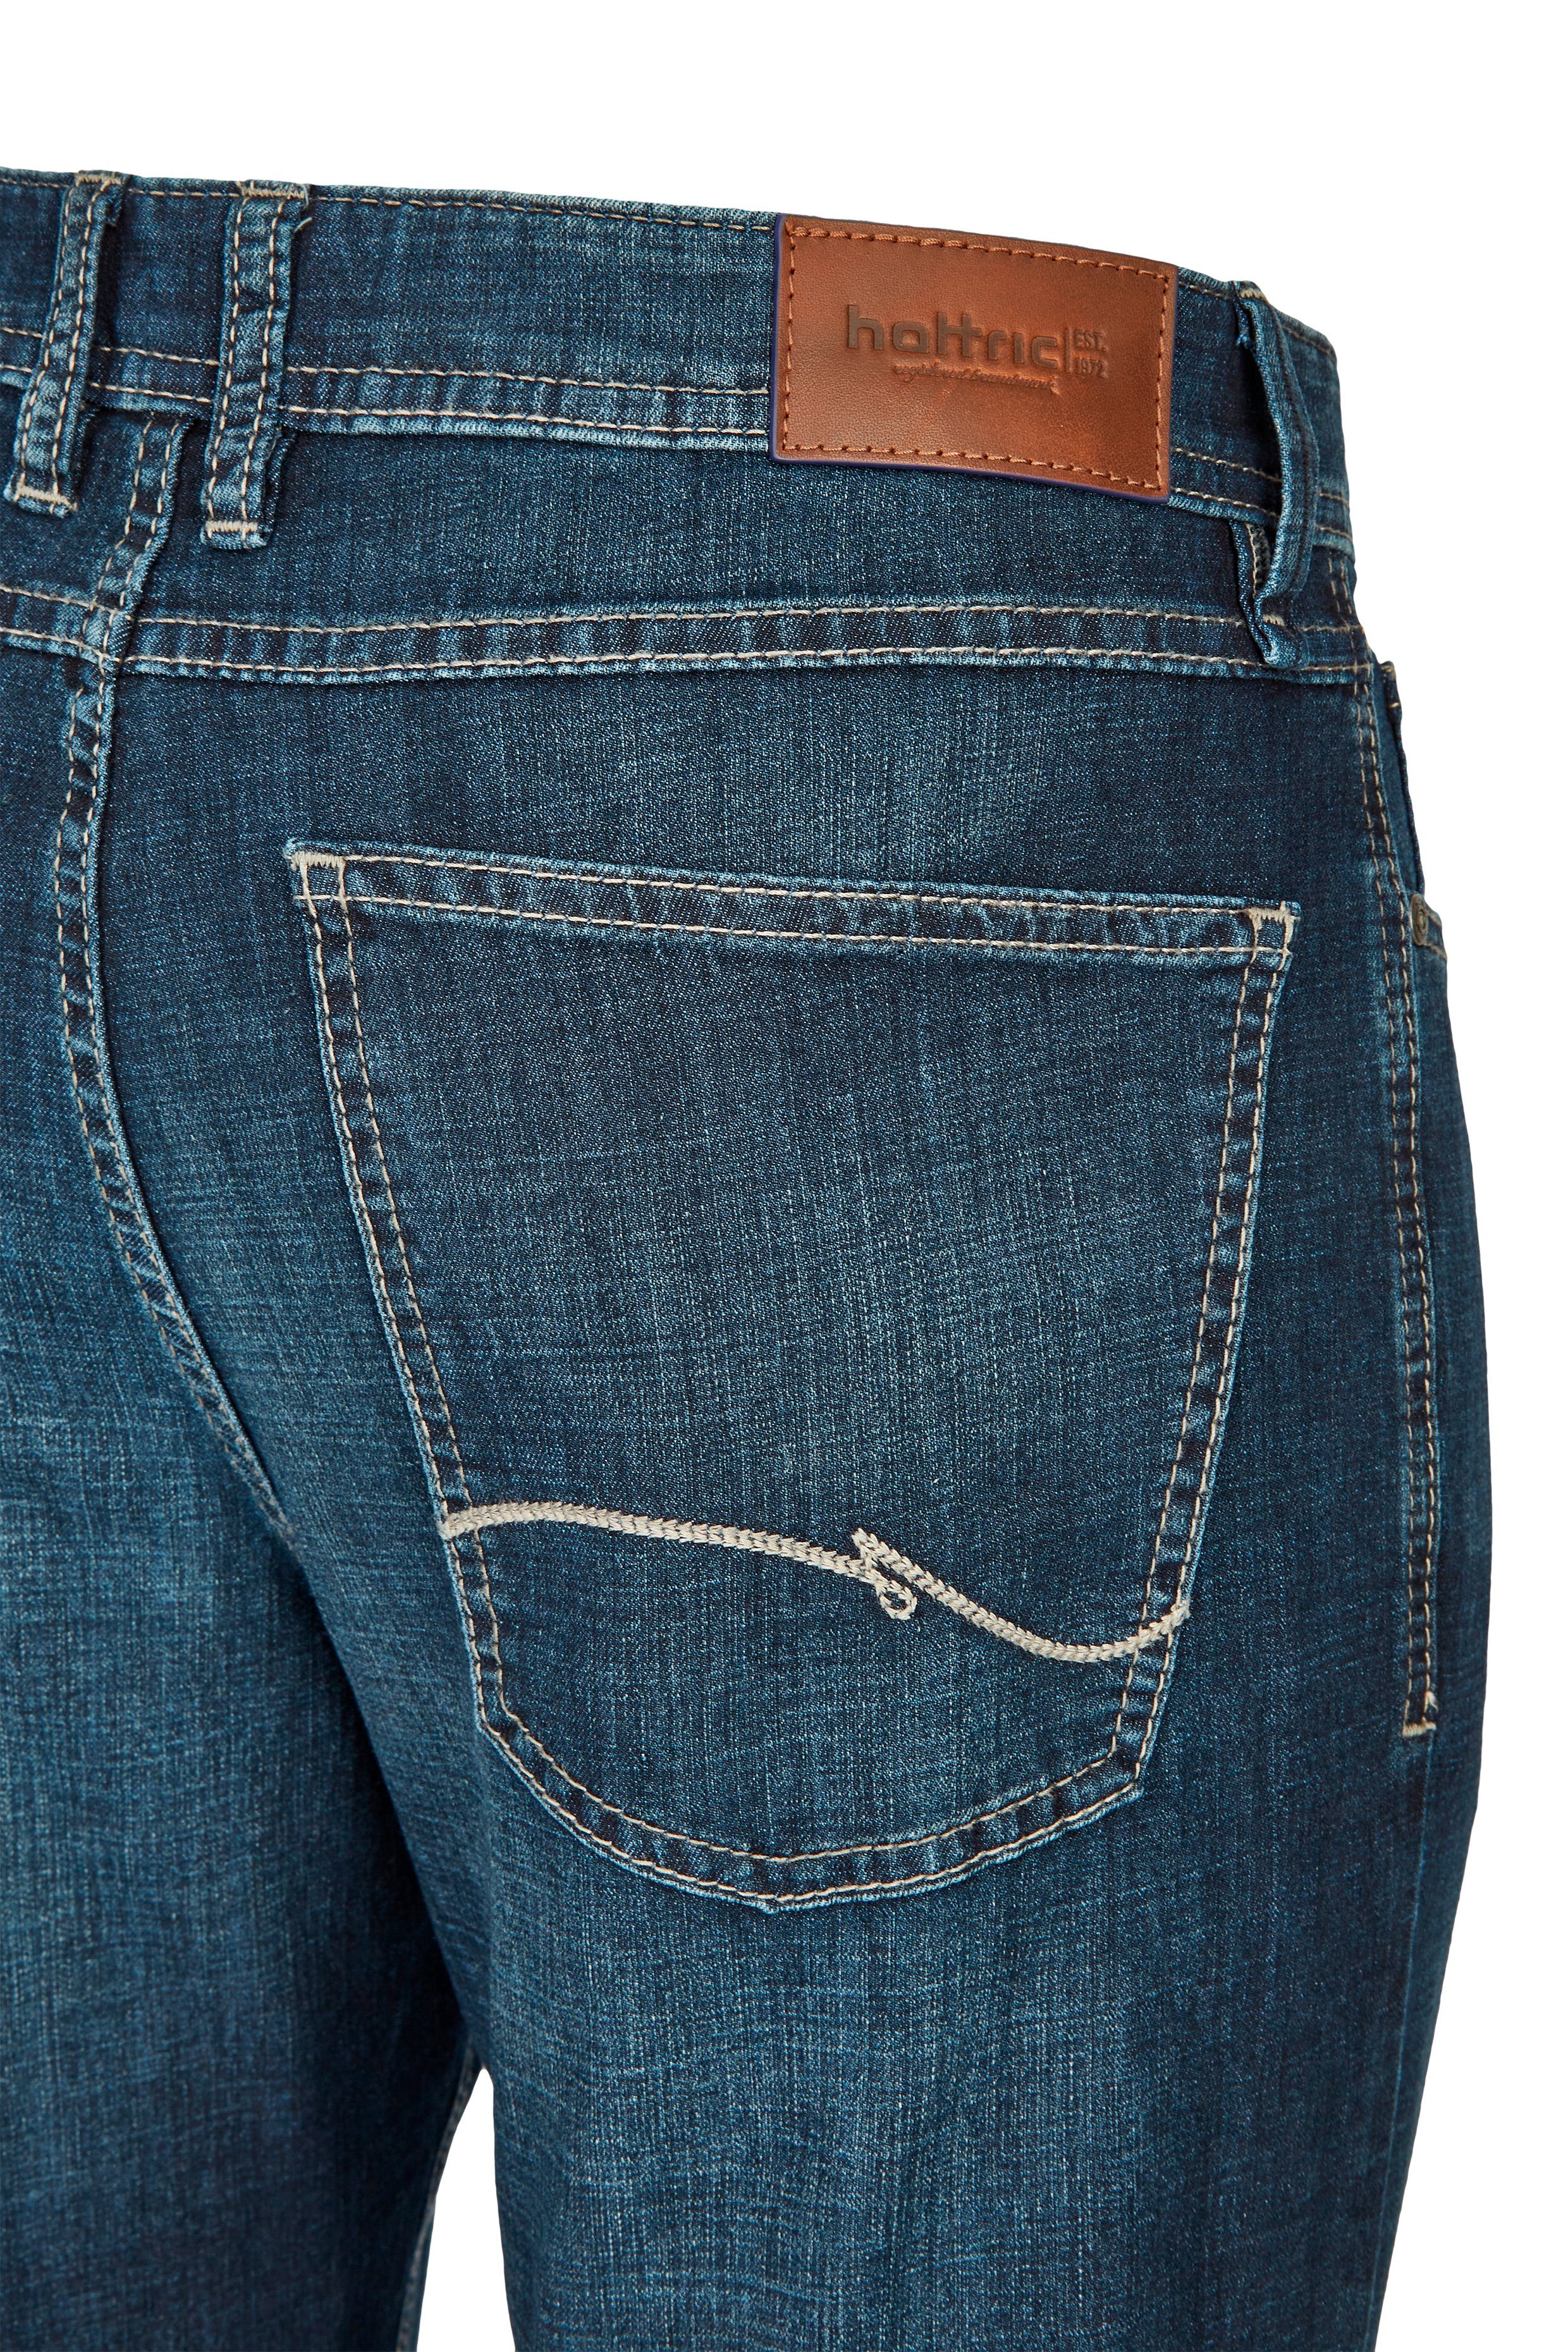 HATTRIC 5-Pocket-Jeans Hattric 688275 indigo 5647.48 - LIGHT dark ULTRA HUNTER